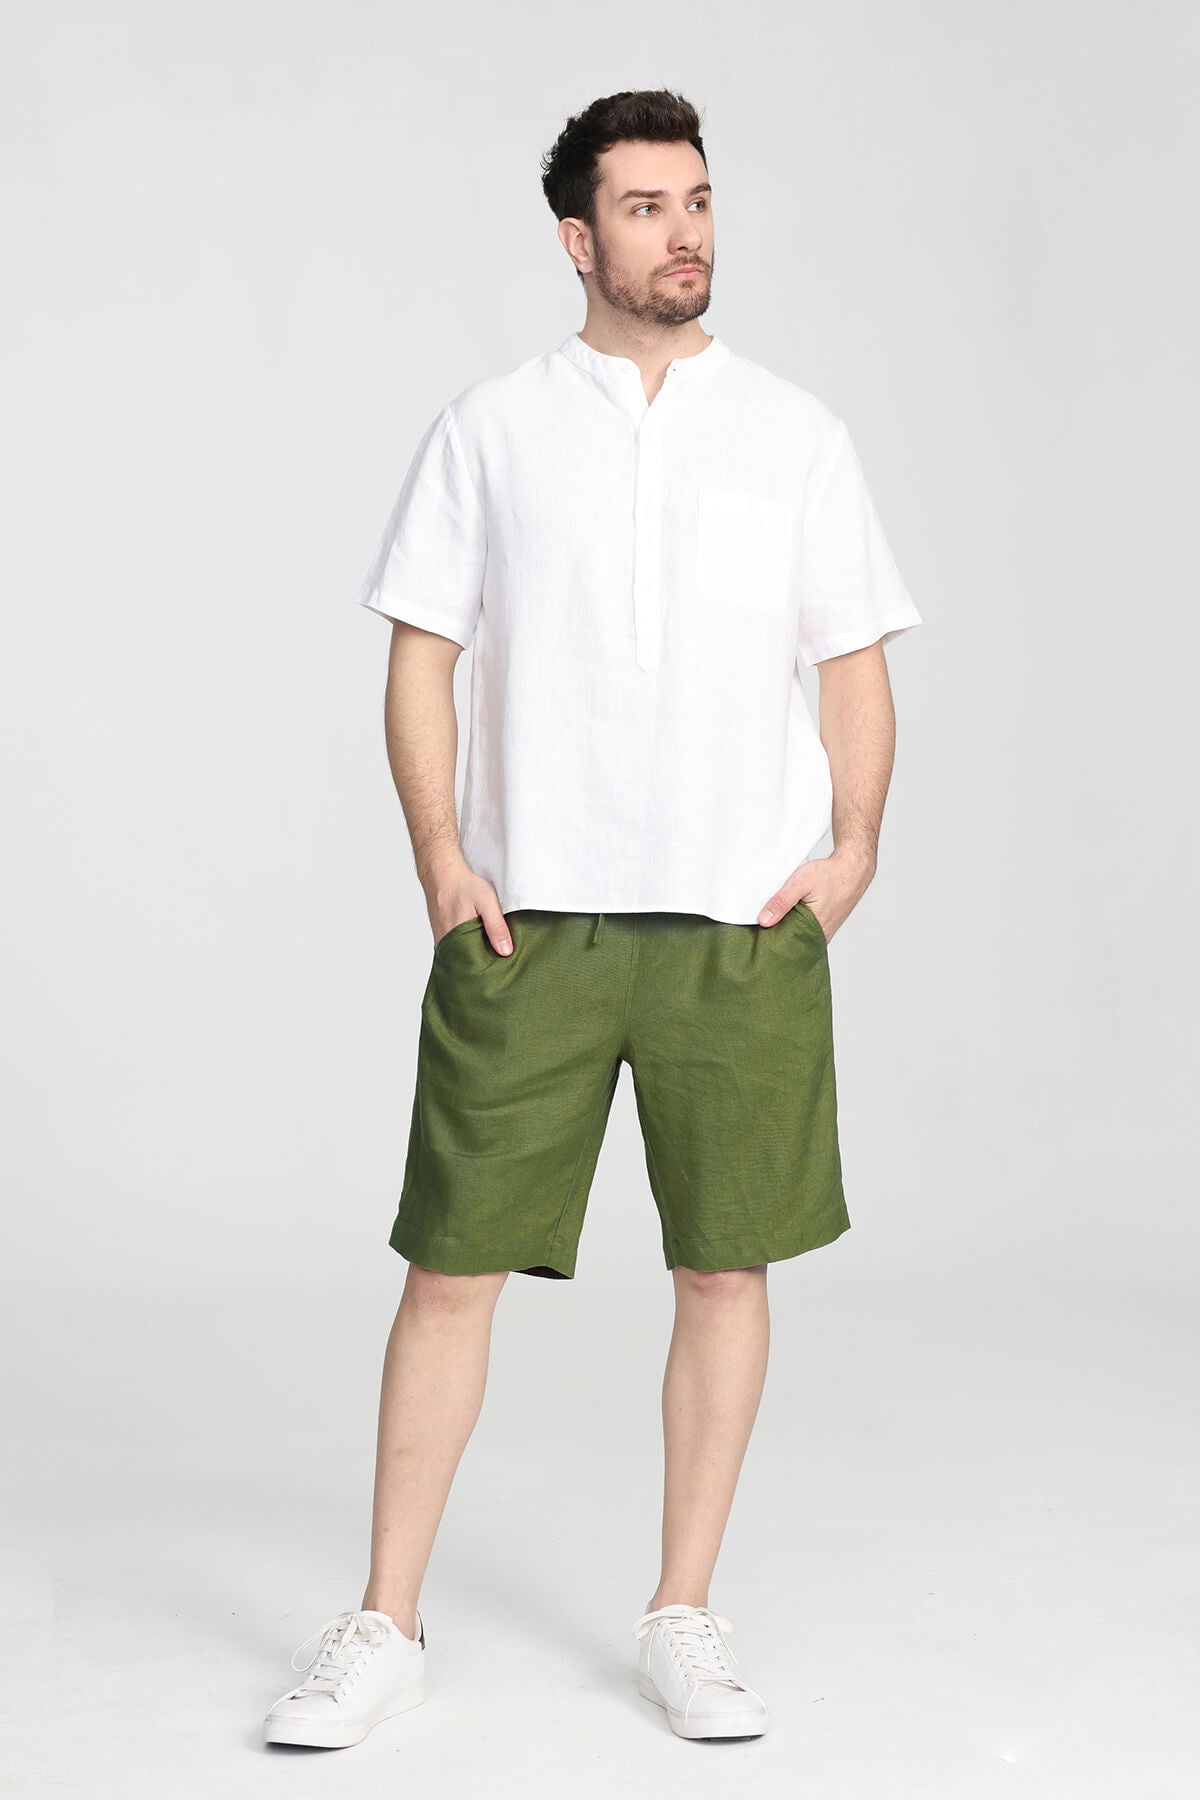 Ecoer- Men's 100% Organic Linen Breathable Shorts Causal Beach